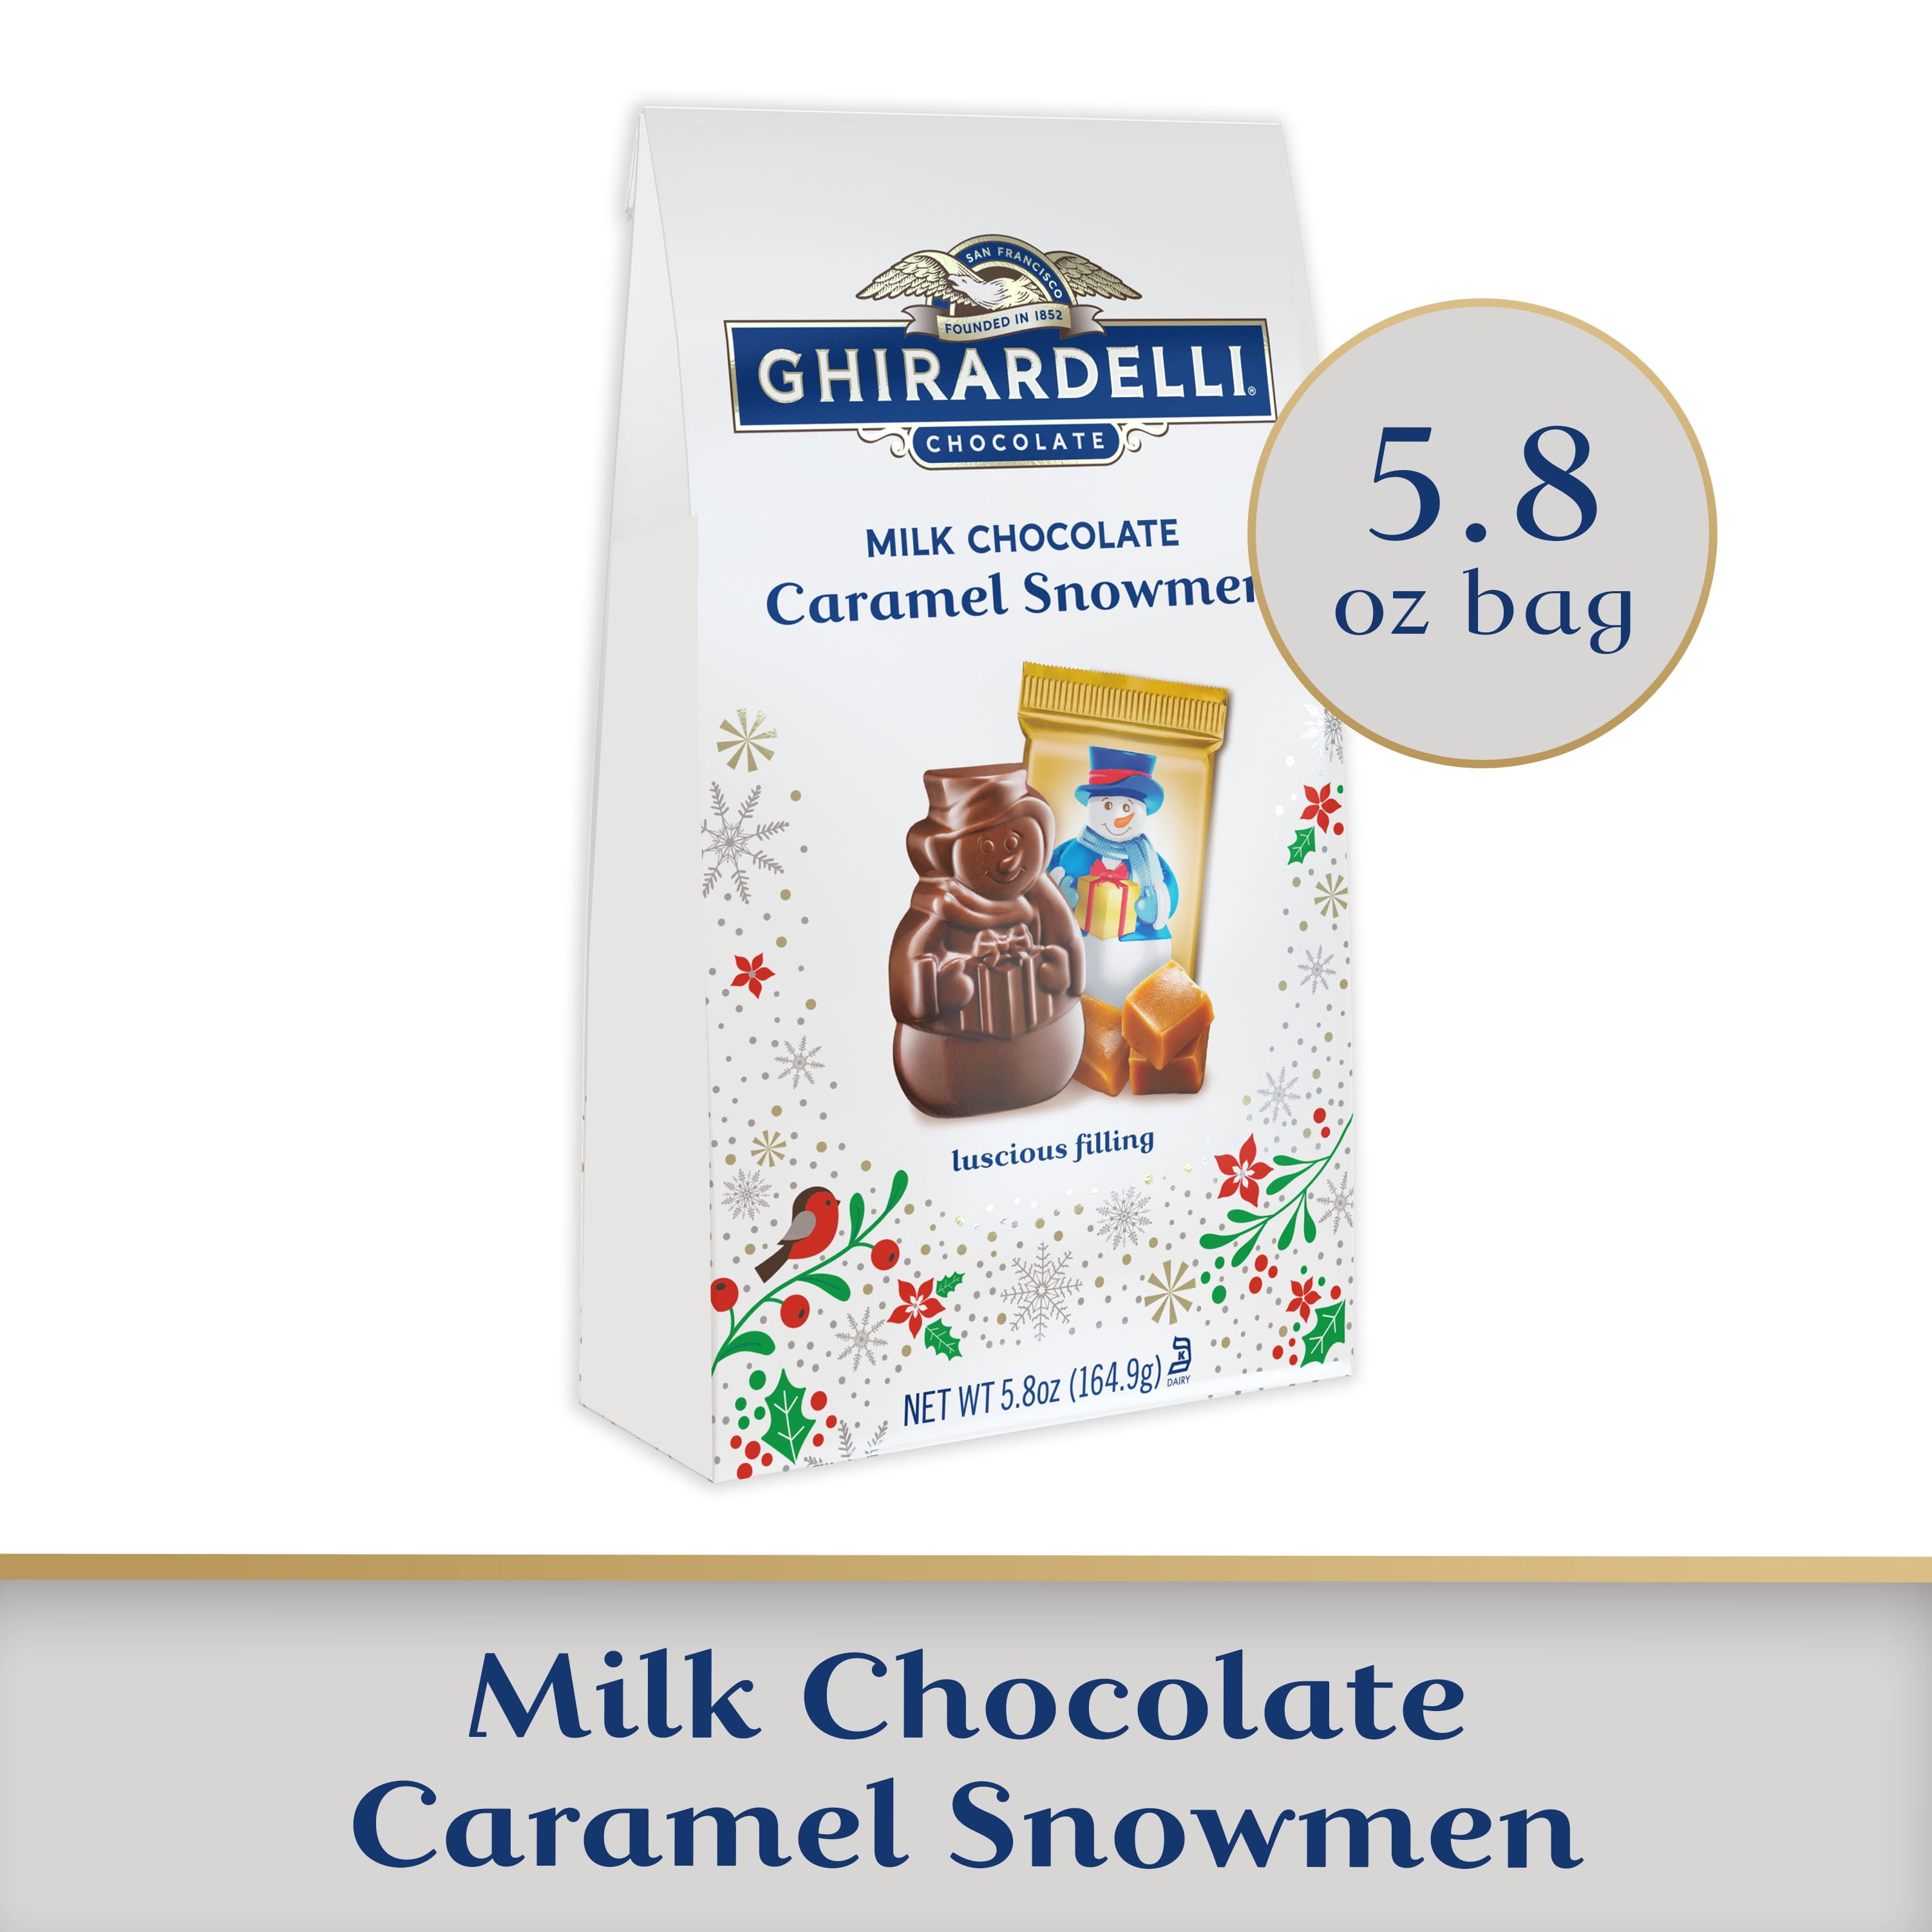 GHIRARDELLI Milk Chocolate Caramel Snowmen, 5.8 Oz Bag